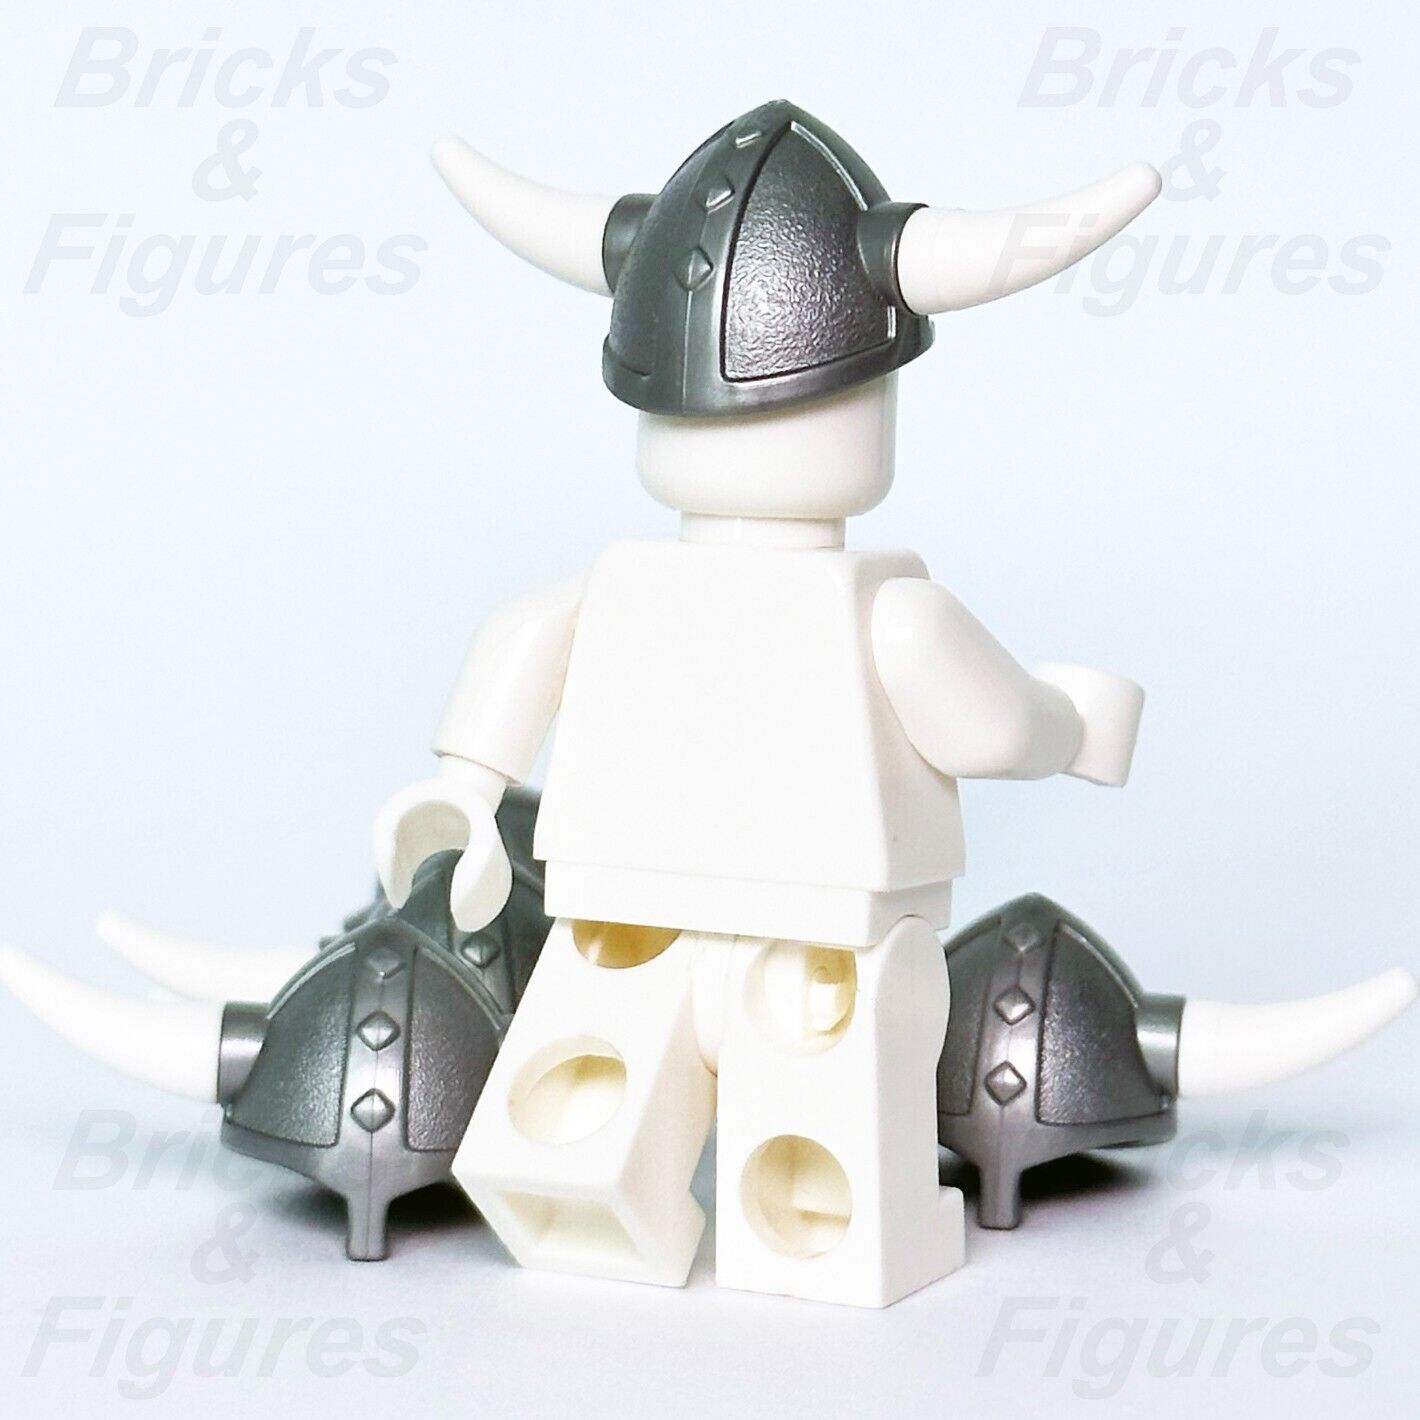 LEGO 5 x Viking Helmet Flat Silver w/ White Horns Minifigure Part Creator x1533 - Bricks & Figures